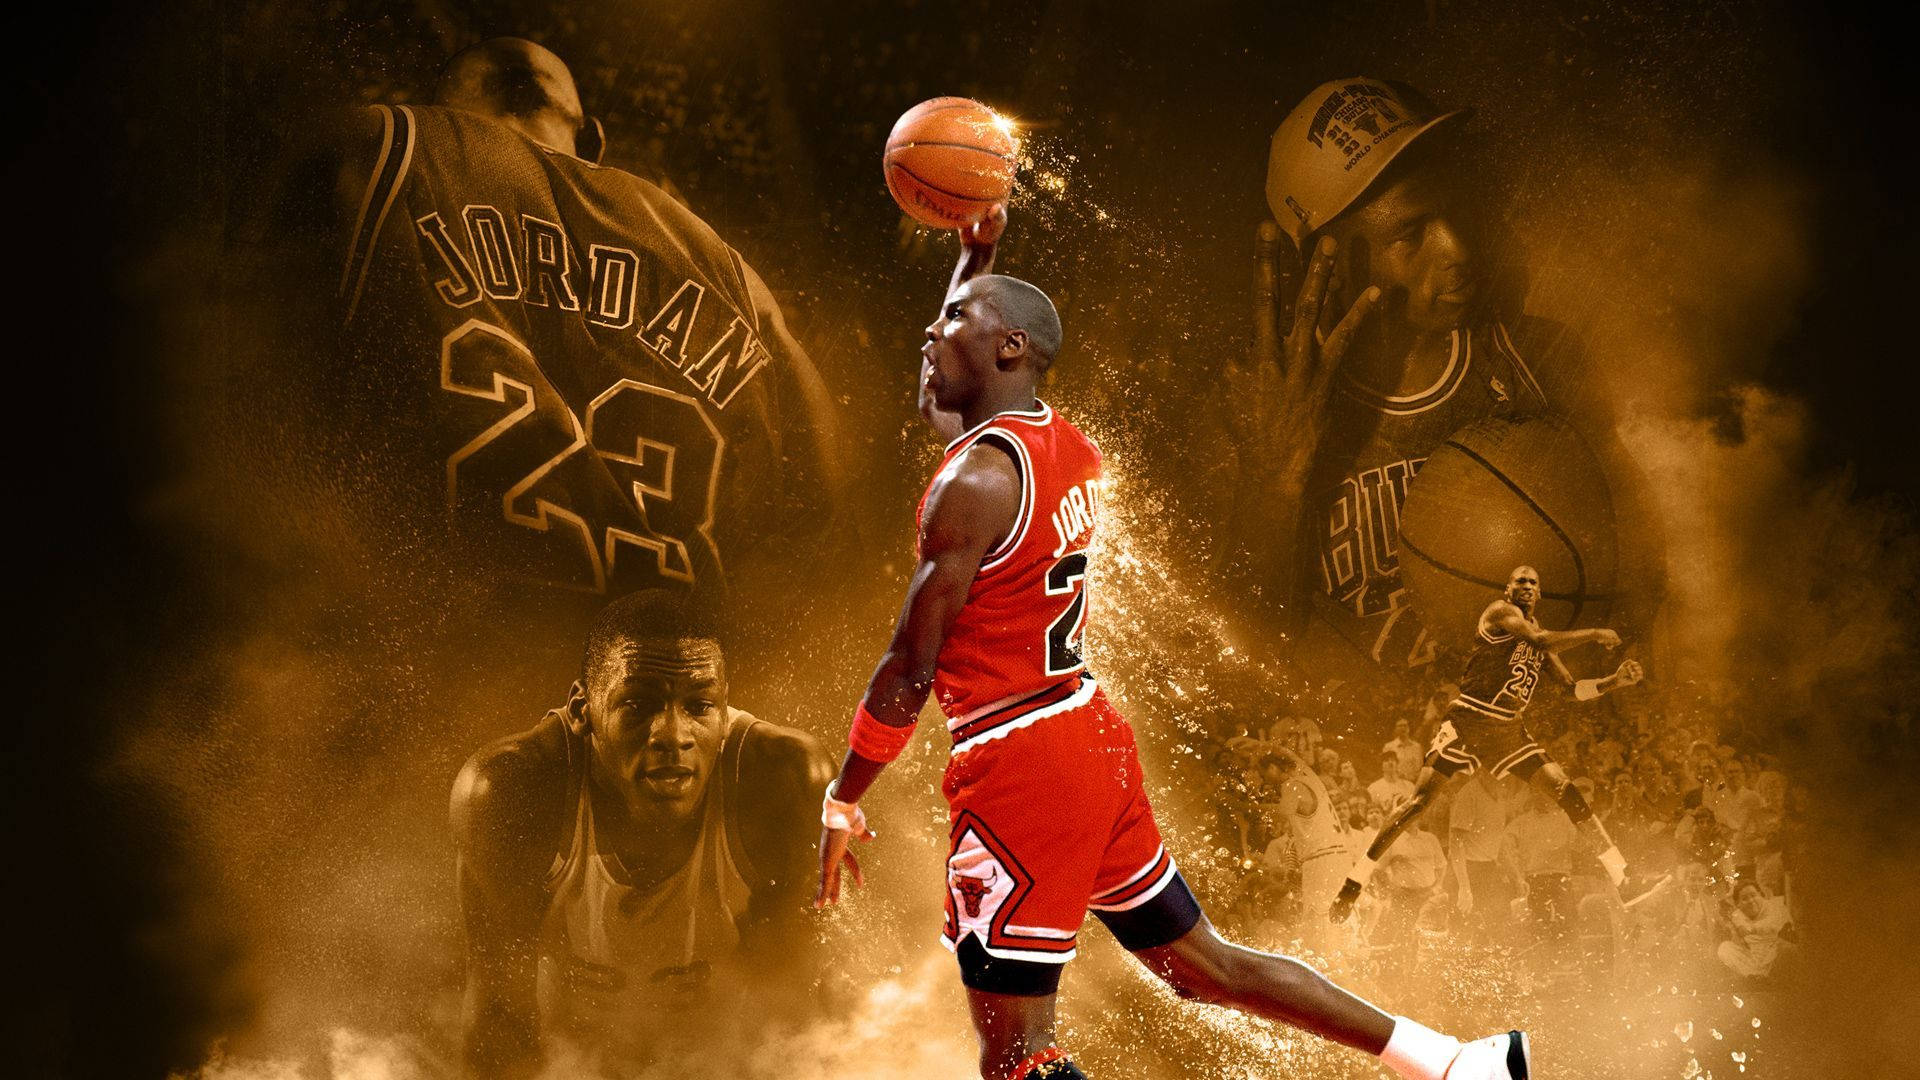 1920X1080 Michael Jordan Wallpaper and Background